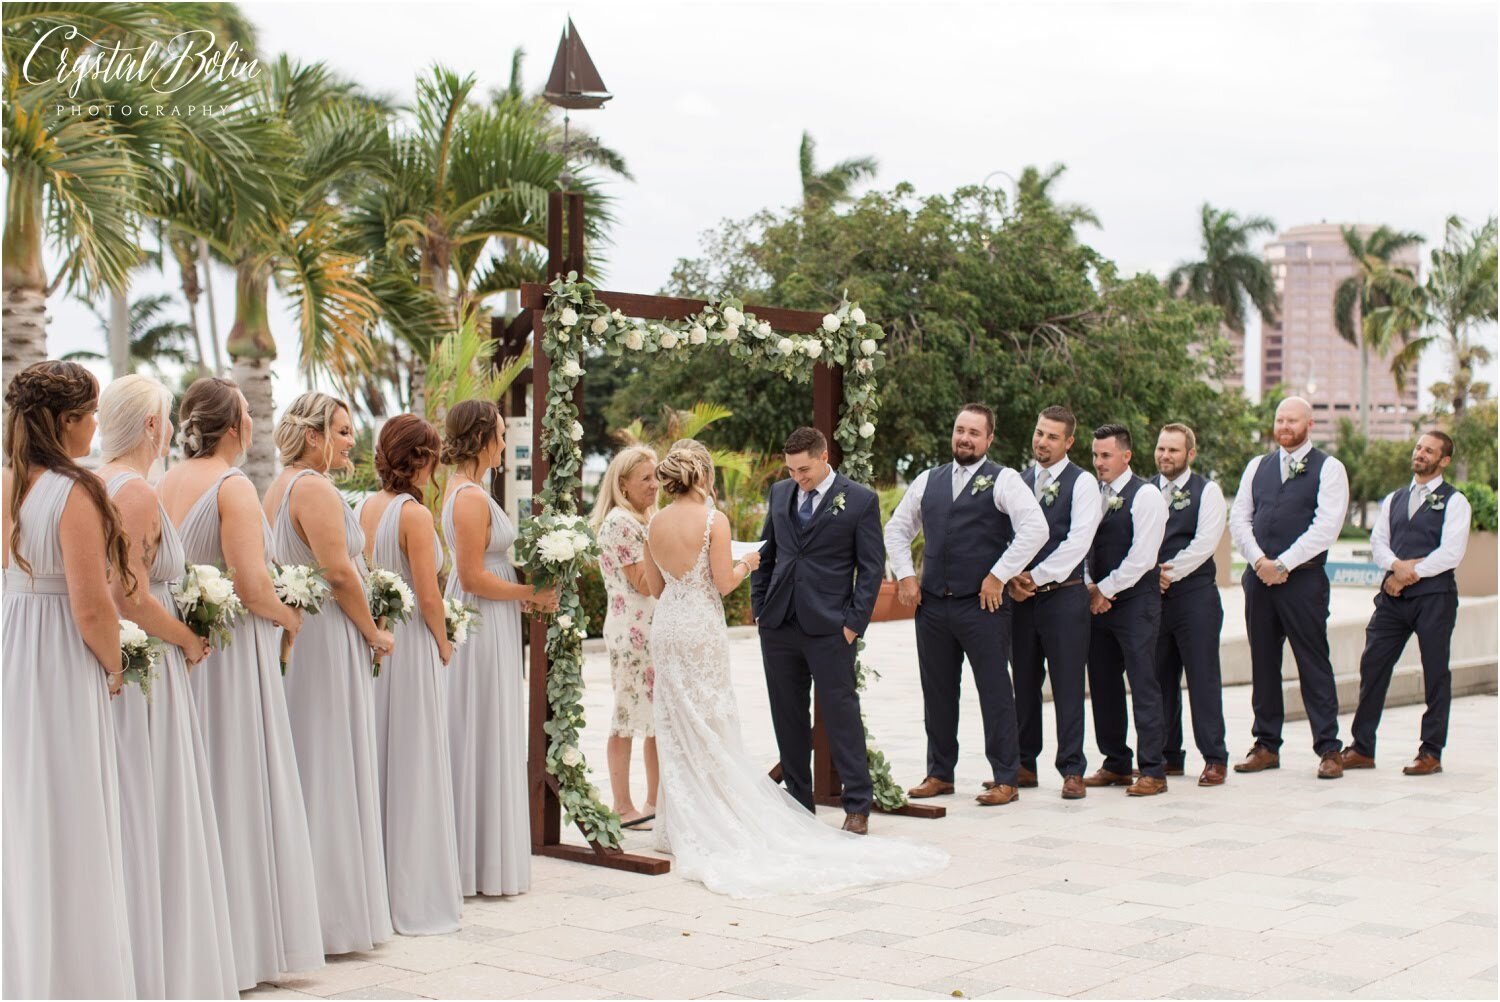 Elegant Tropical Wedding at the West Palm Beach Lake Pavilion 